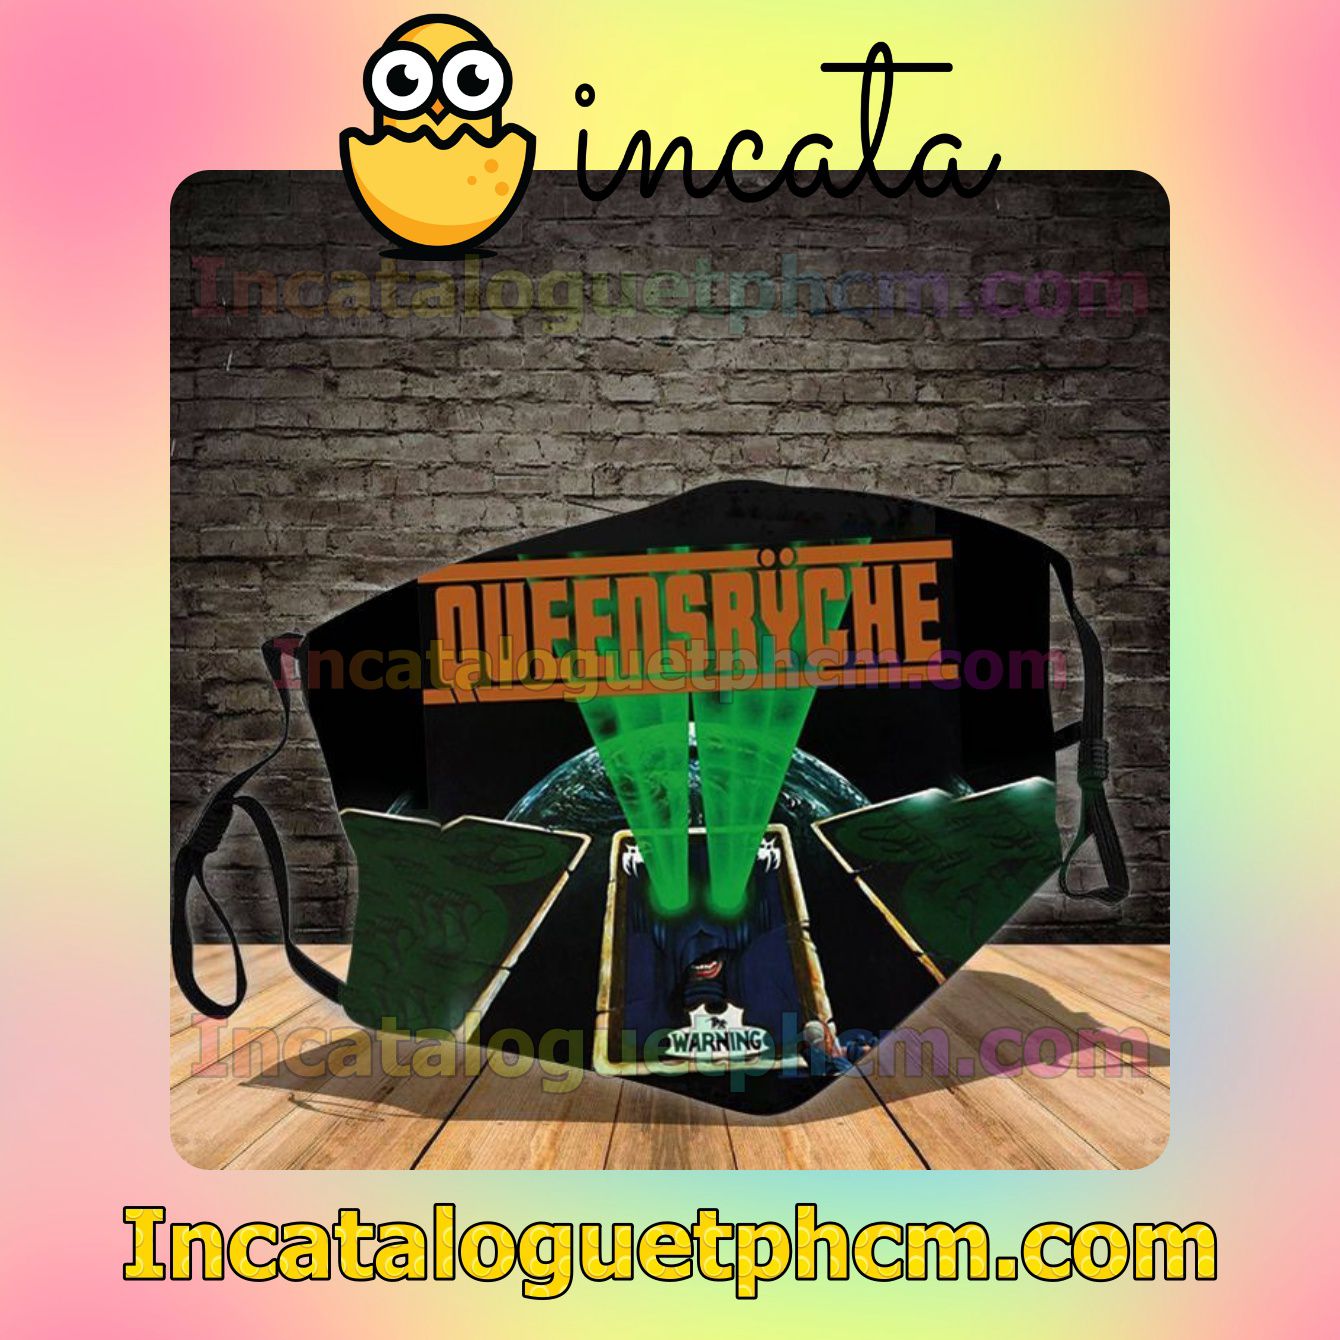 Queensrÿche The Warning Album Cover Cotton Masks